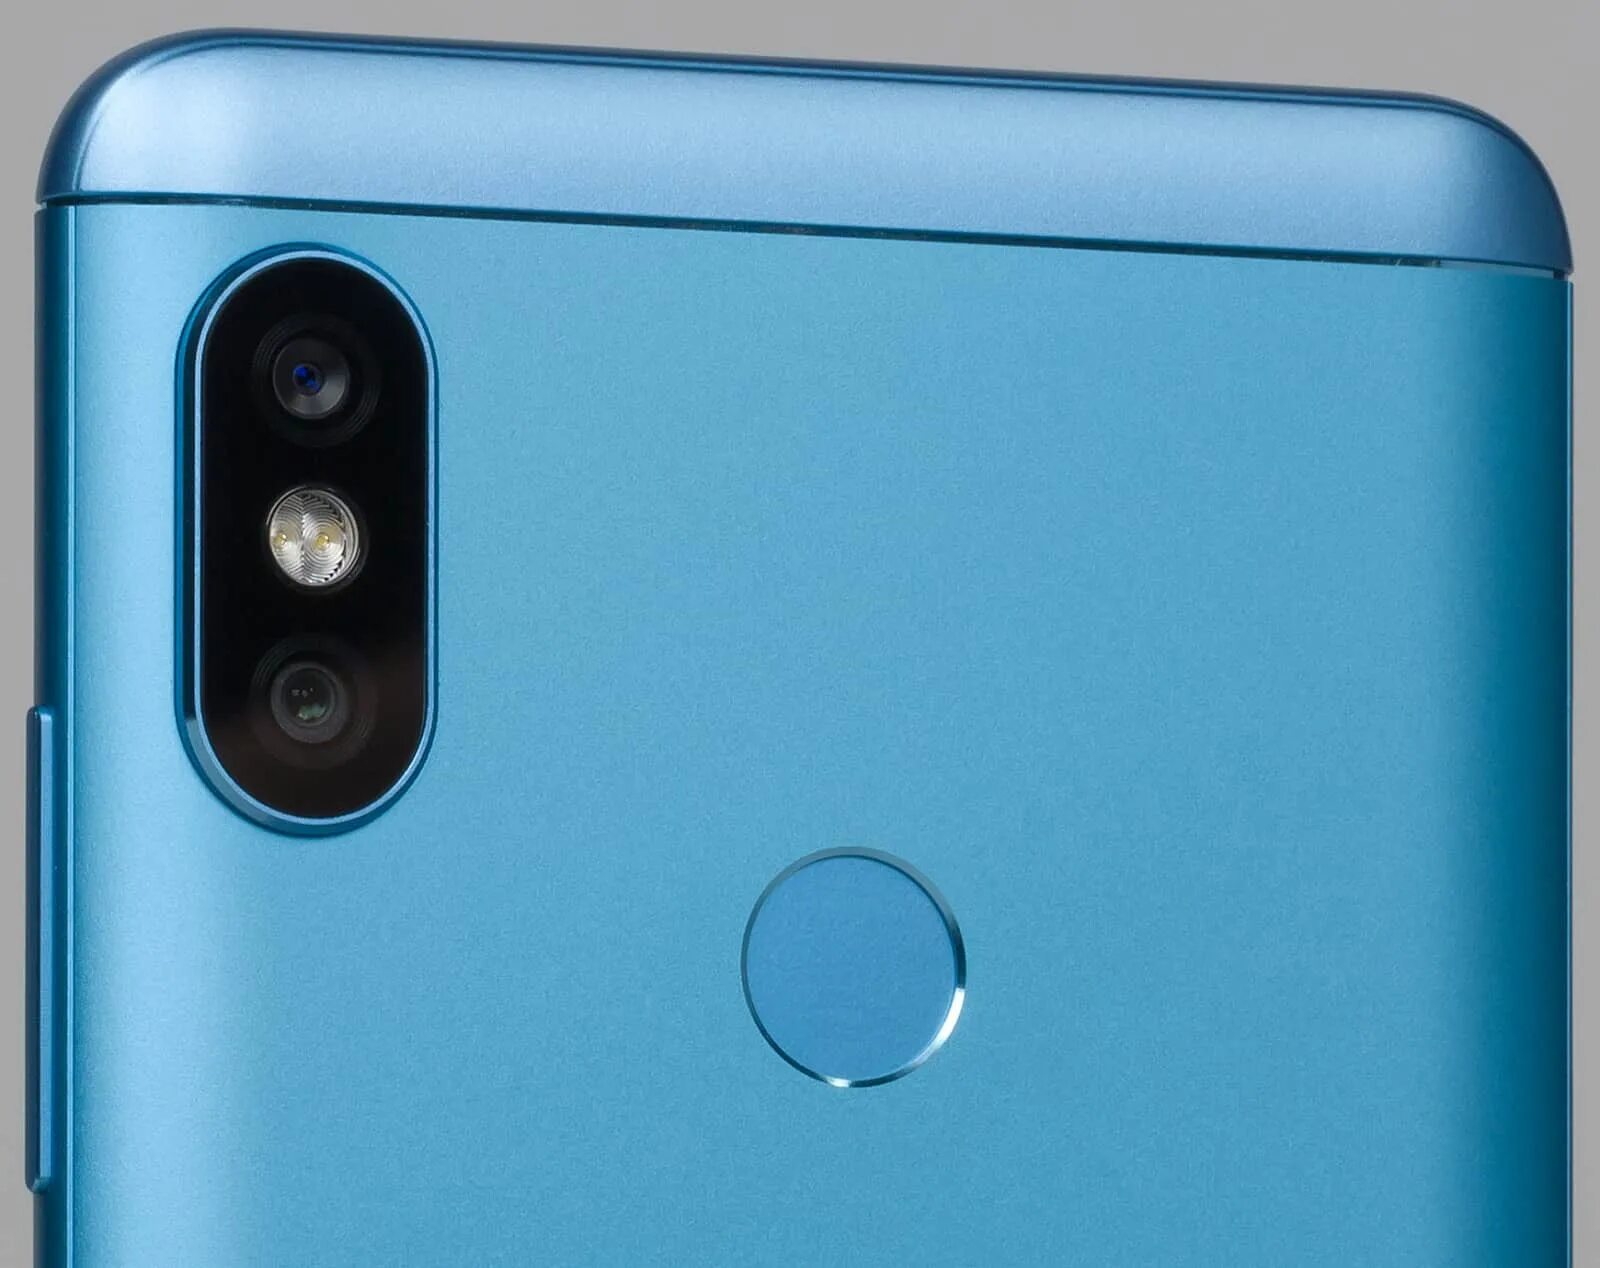 Redmi камера. Xiaomi Redmi Note 5 4/64gb Blue (голубой). Сяоми редми с 3 камерами. Xiaomi Redmi с 2 камерами и отпечатком пальца. Redmi Note 4 камеры.